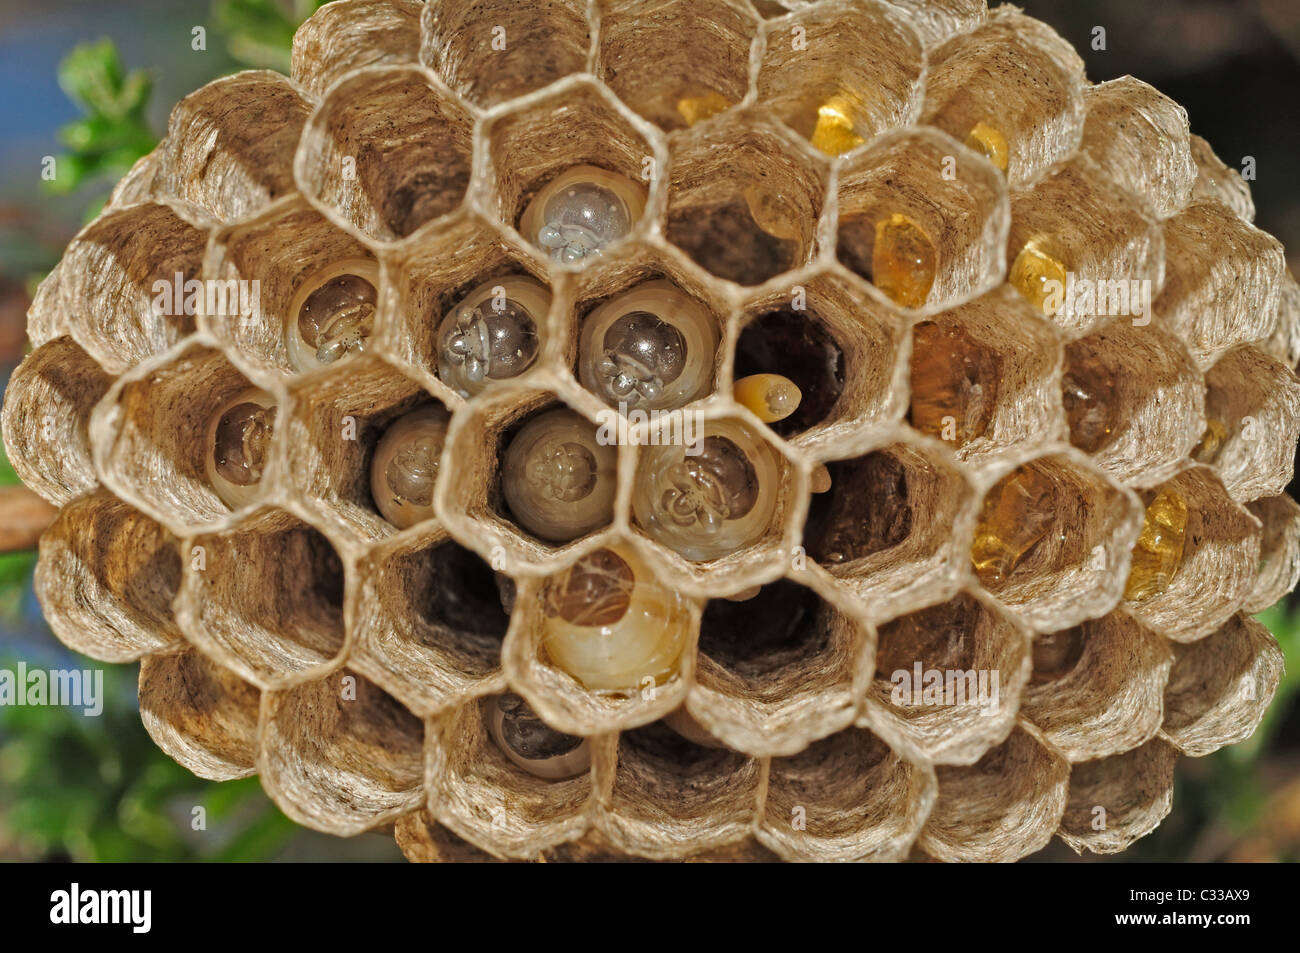 European Paper Wasp nest (Polistes gallicus) Stock Photo